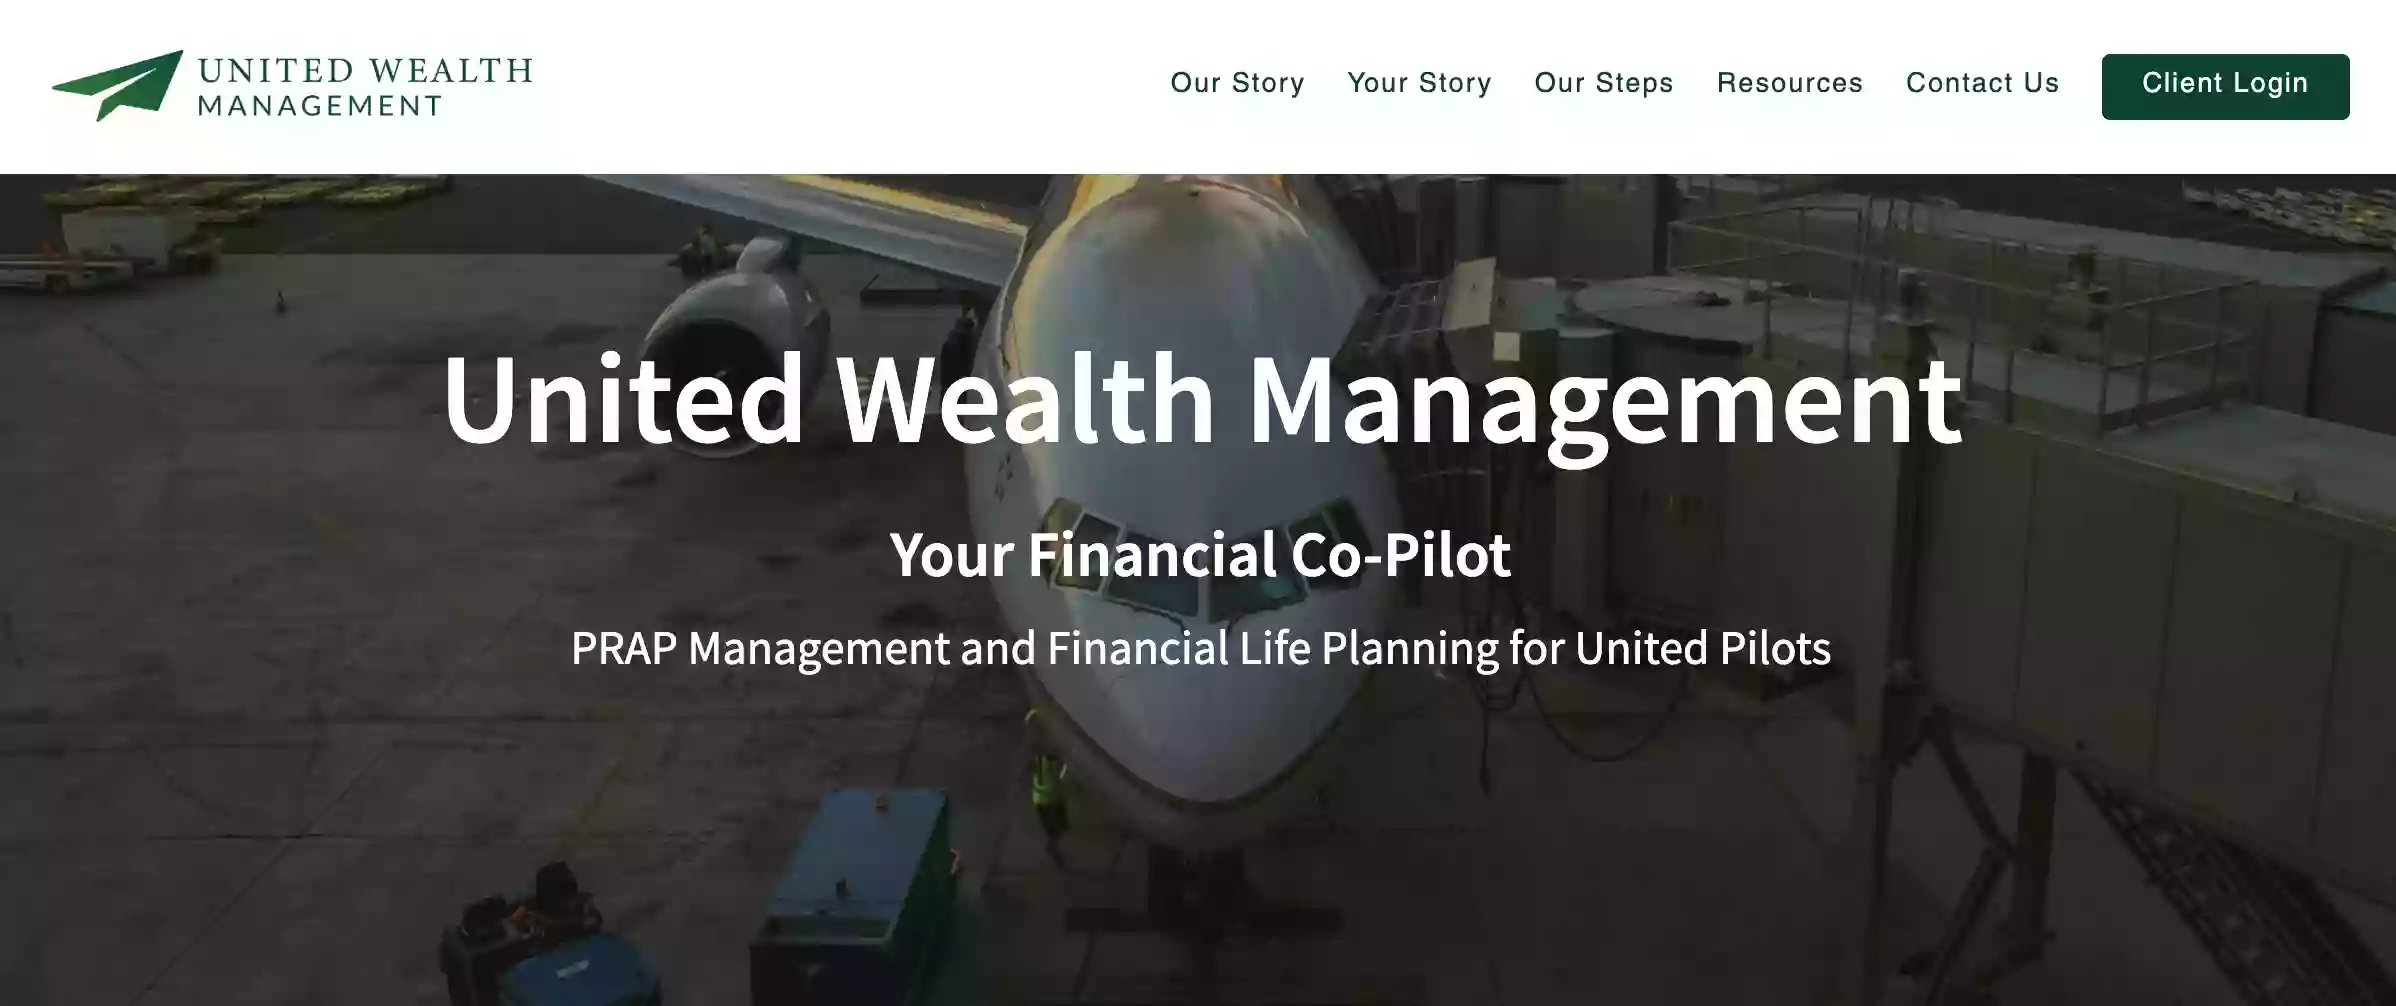 United Wealth Management, LLC